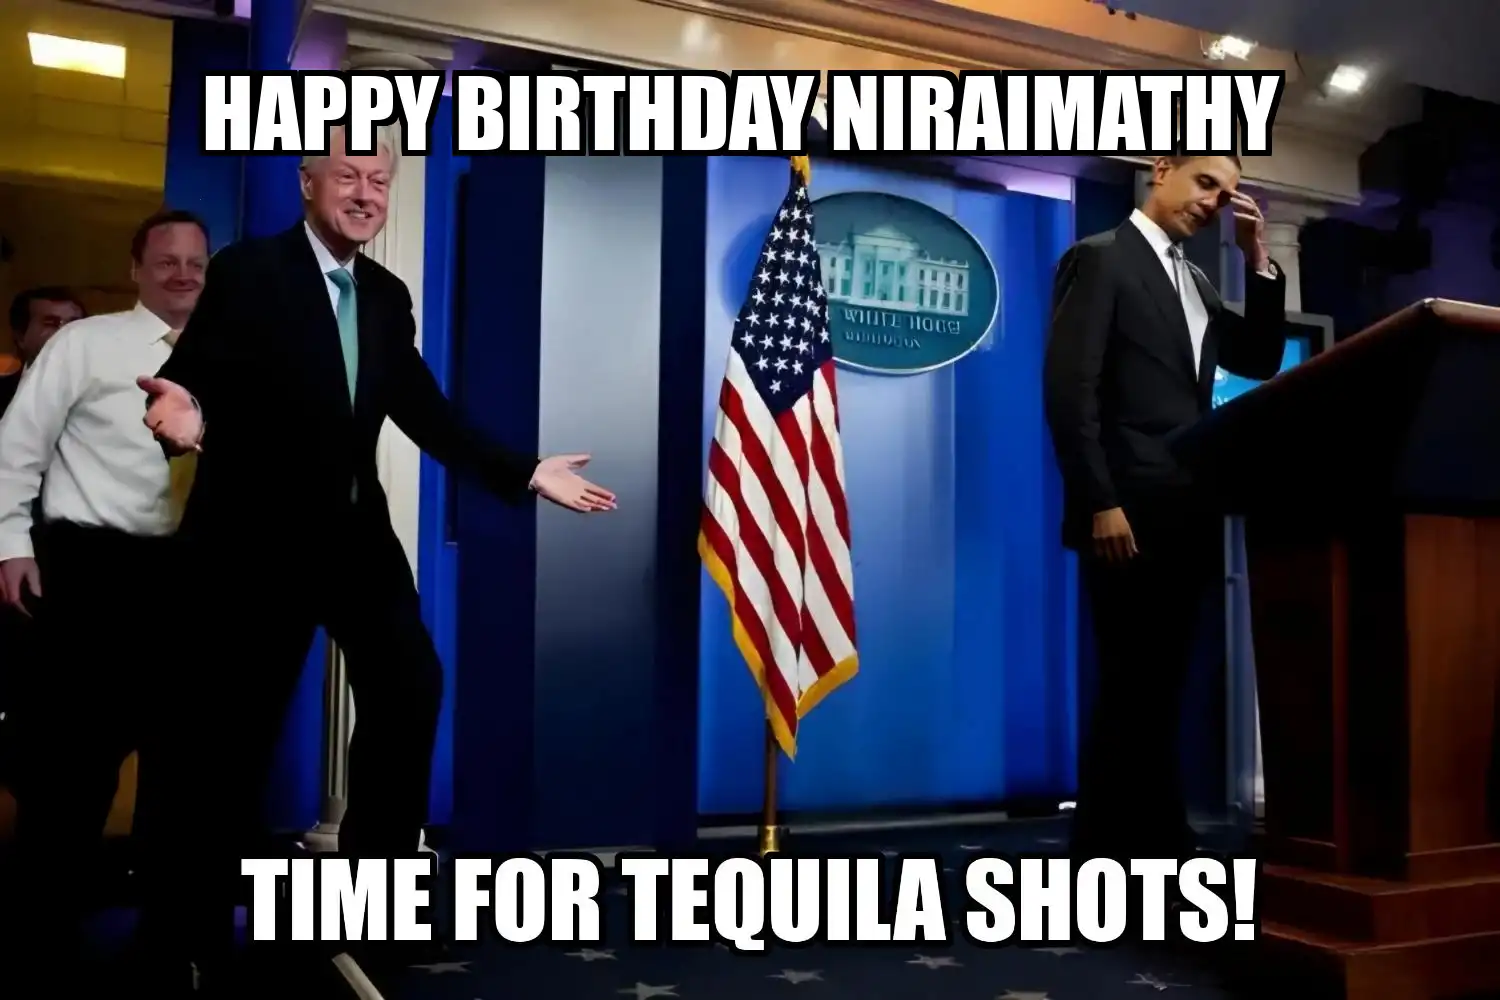 Happy Birthday Niraimathy Time For Tequila Shots Memes